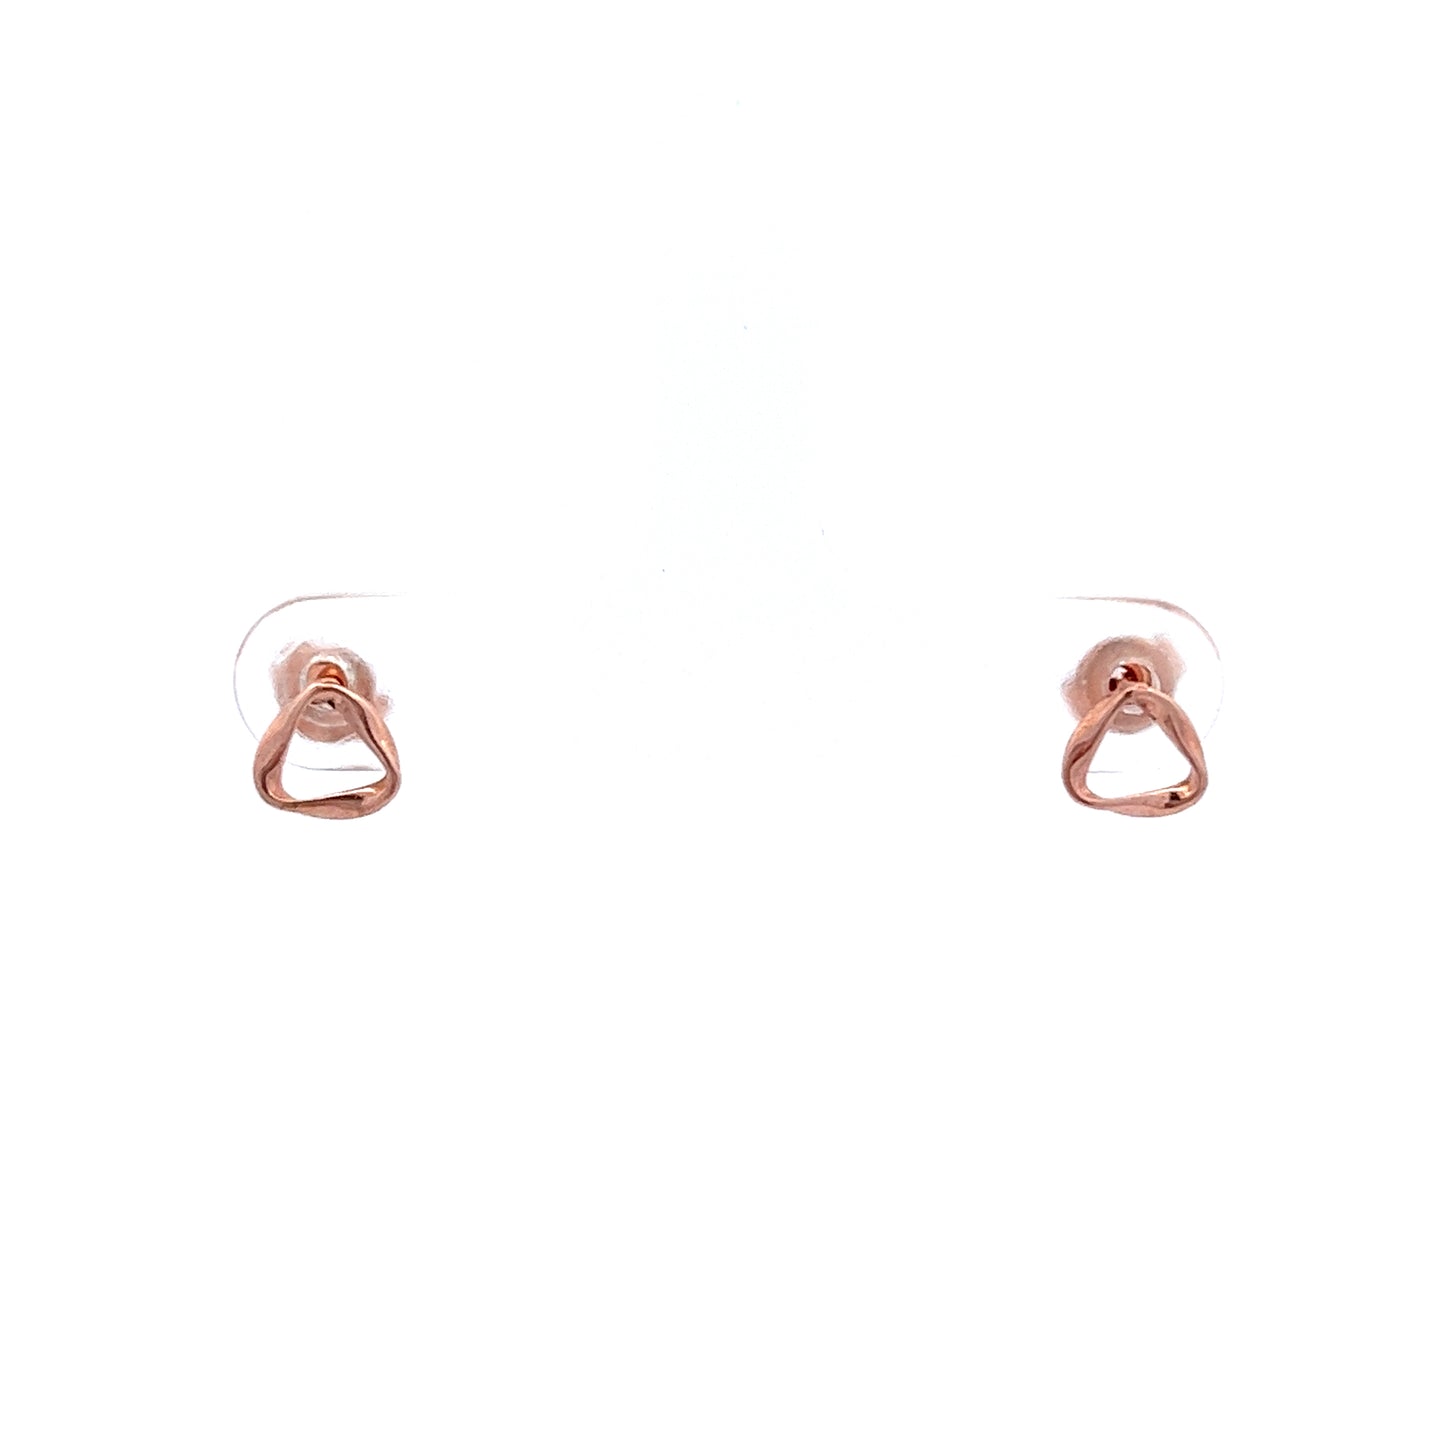 Tri Earrings in Rose Gold